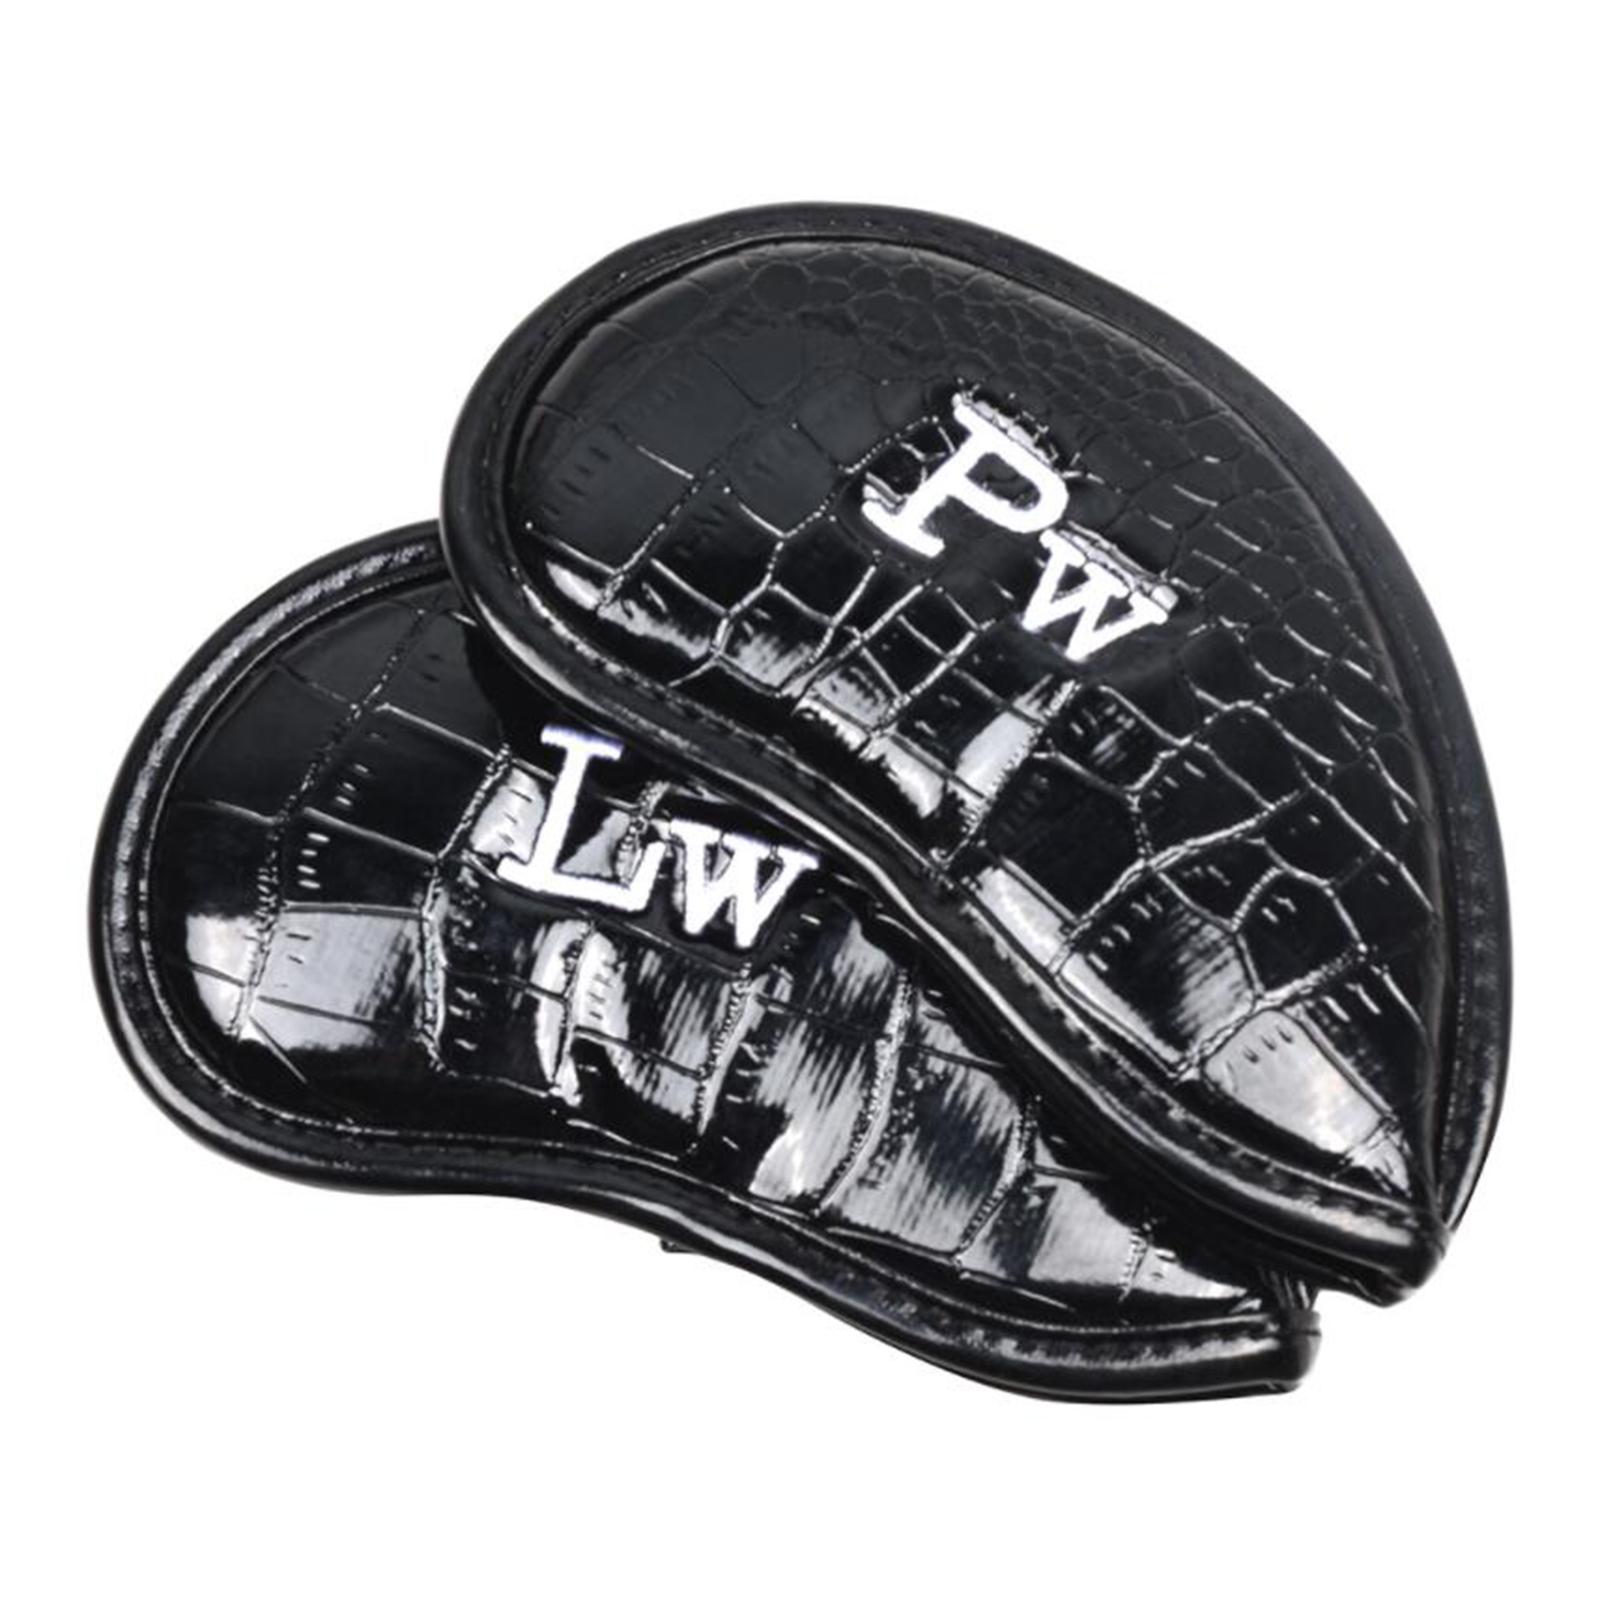 12x Golf Iron Head Cover Leather PU Golf Club Headcover Universal Waterproof Black